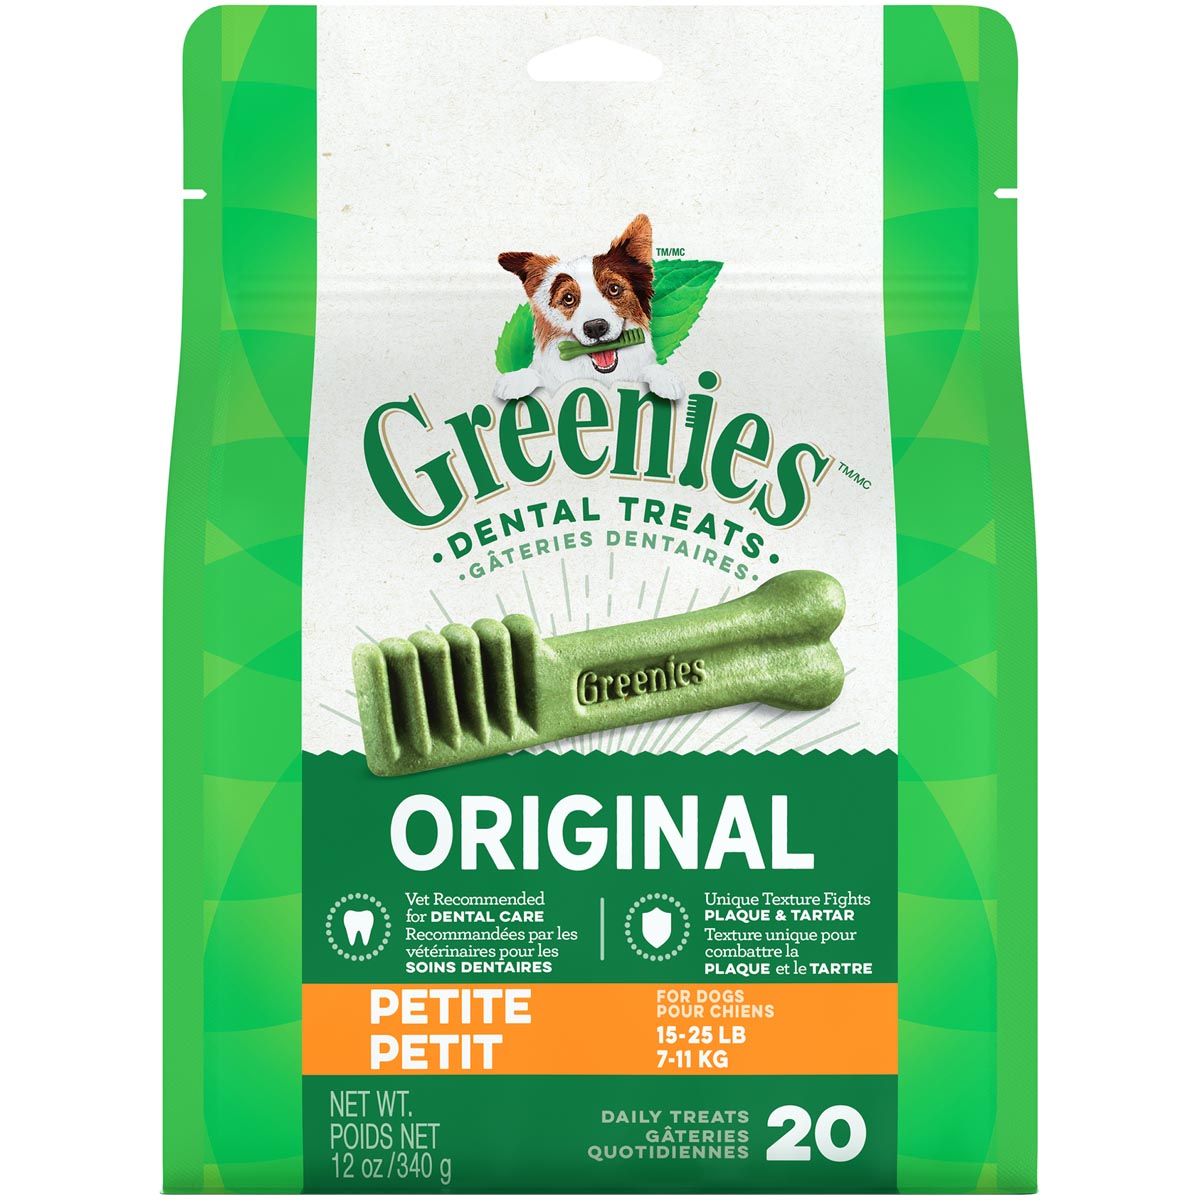 Greenies Dental Treats Original Petite Dog Treats 12 oz. Bag